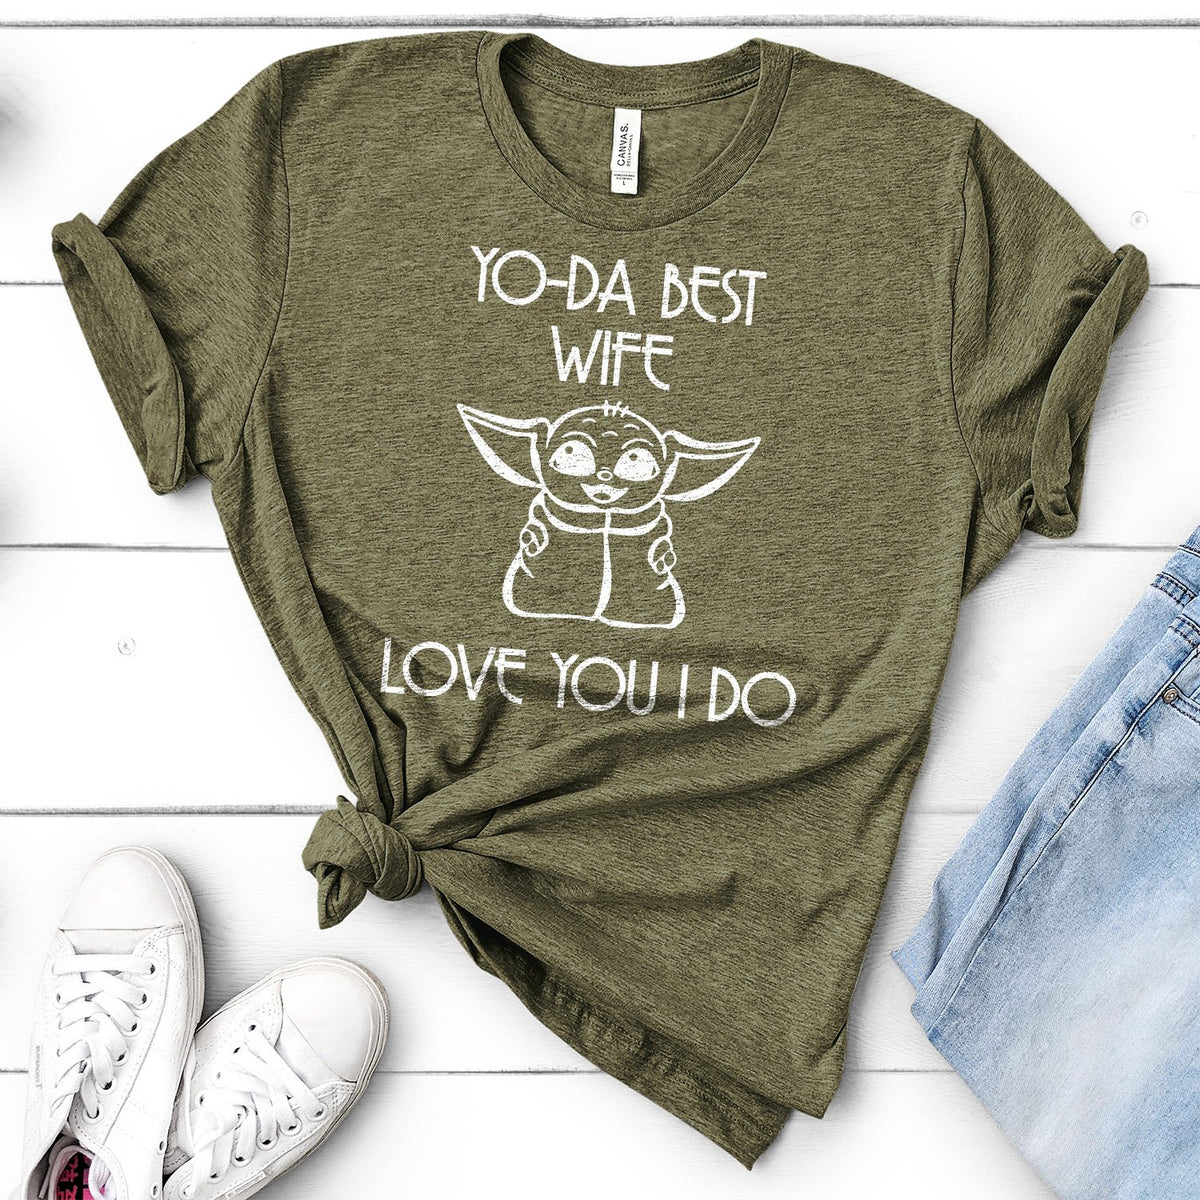 Yo-Da Best Wife Love You I Do - Short Sleeve Tee Shirt